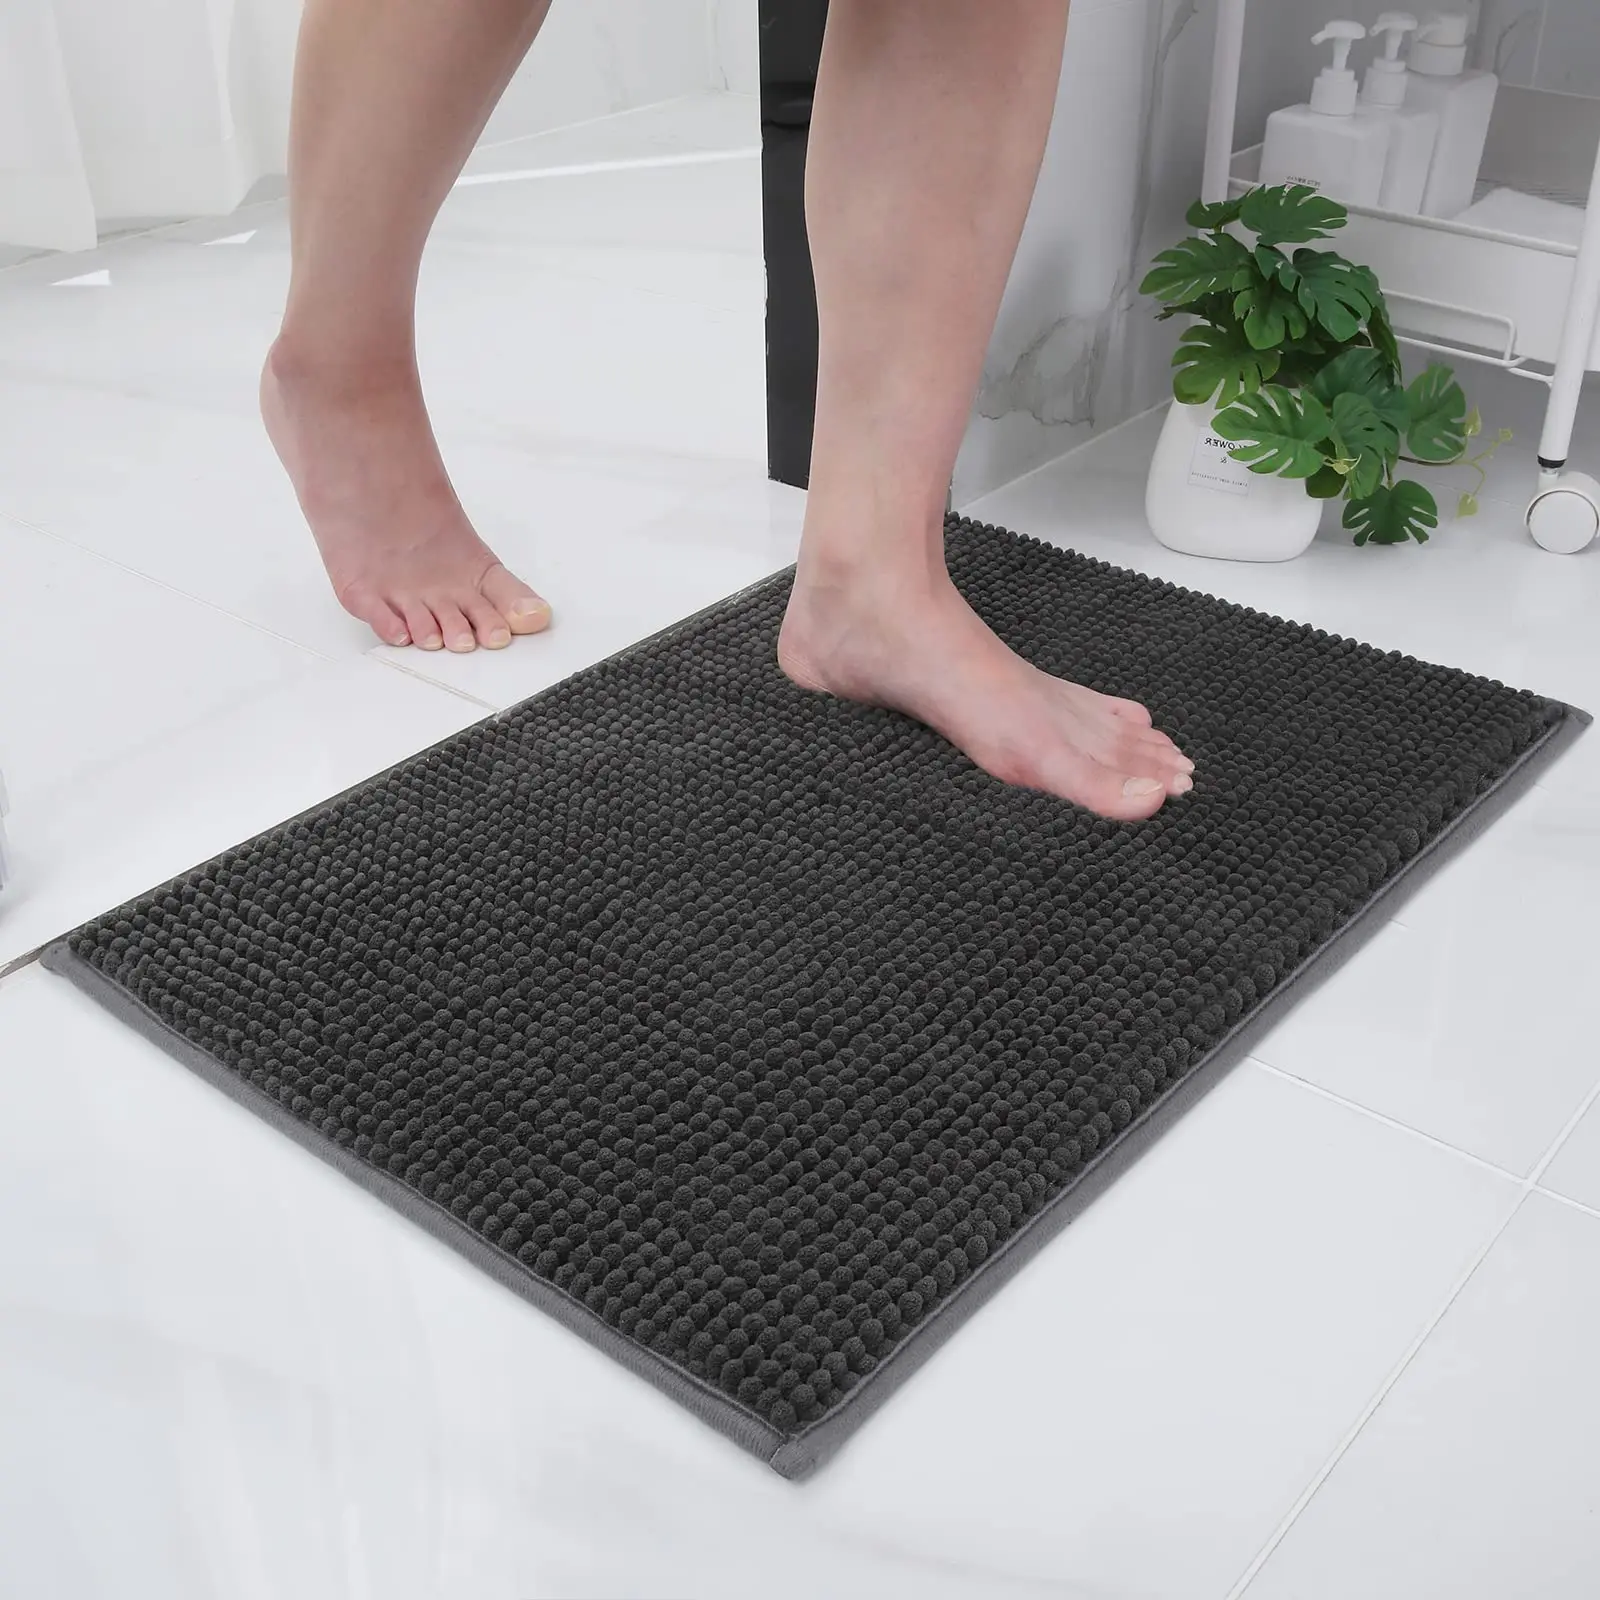 https://ae01.alicdn.com/kf/S573acf94f24c45cc8d25693f20c9891f2/Homaxy-Shaggy-Chenille-Bath-Mat-Absorbent-Quick-Dry-Floor-Decoration-Shower-Pad-Soft-Thick-Plush-Carpet.jpg